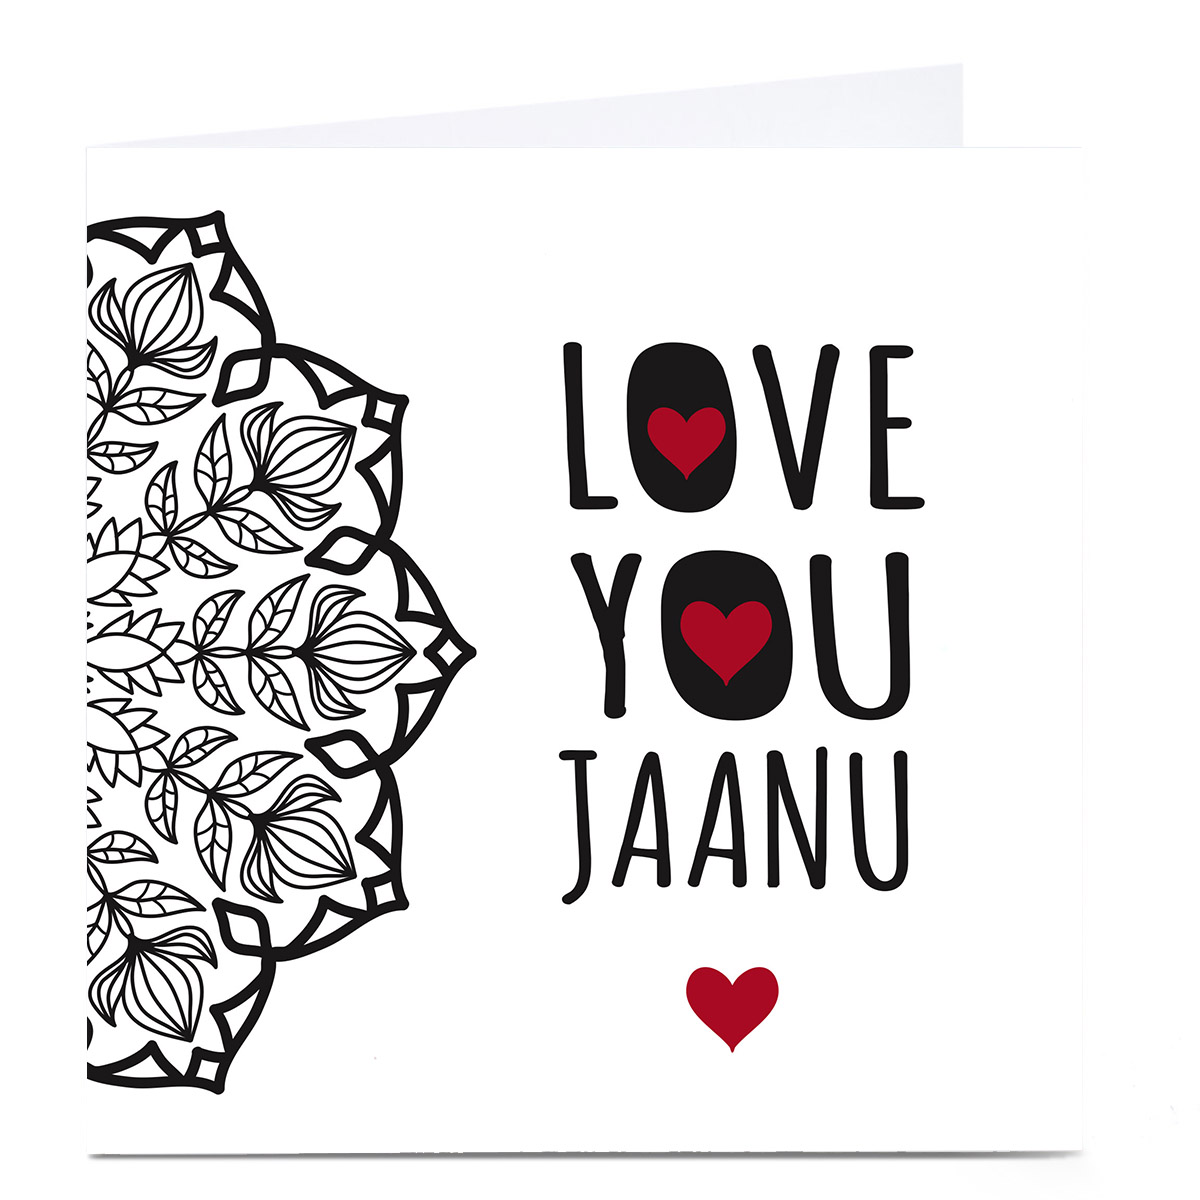 Personalised Roshah Designs Valentine's Day Card - Jaanu